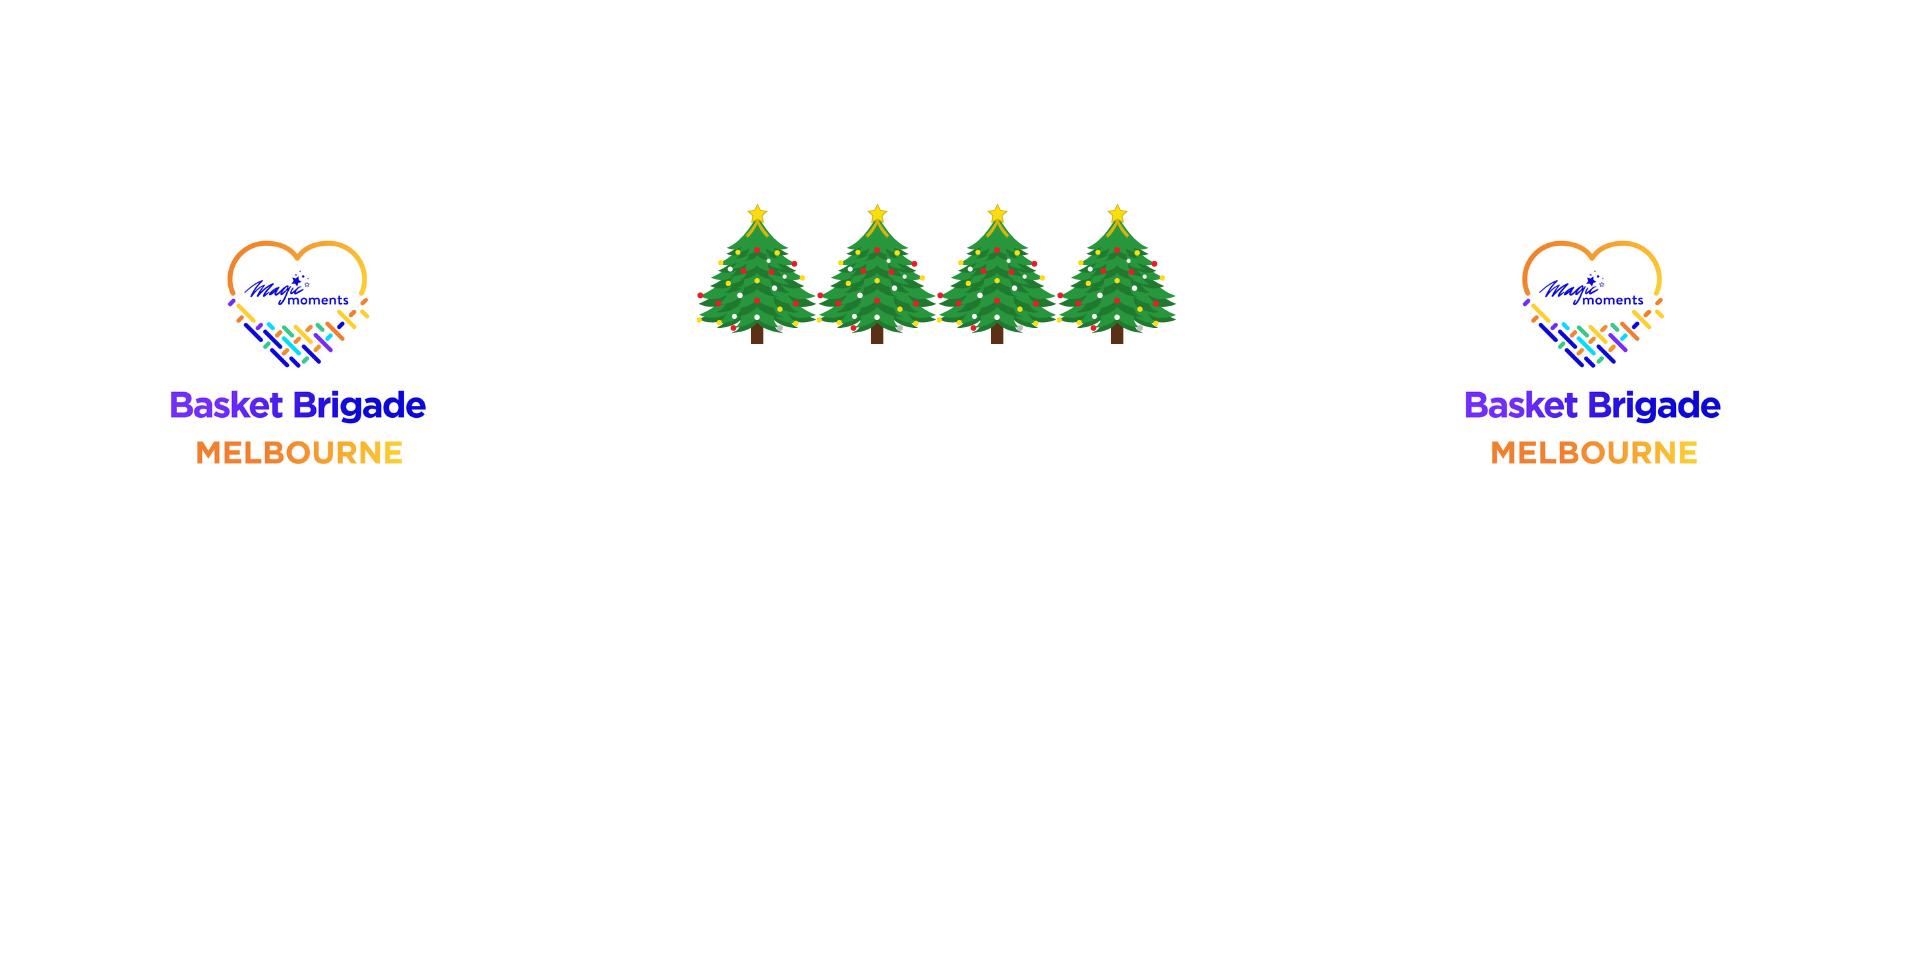 Melbourne BB Virtual Basket Buddies 2021